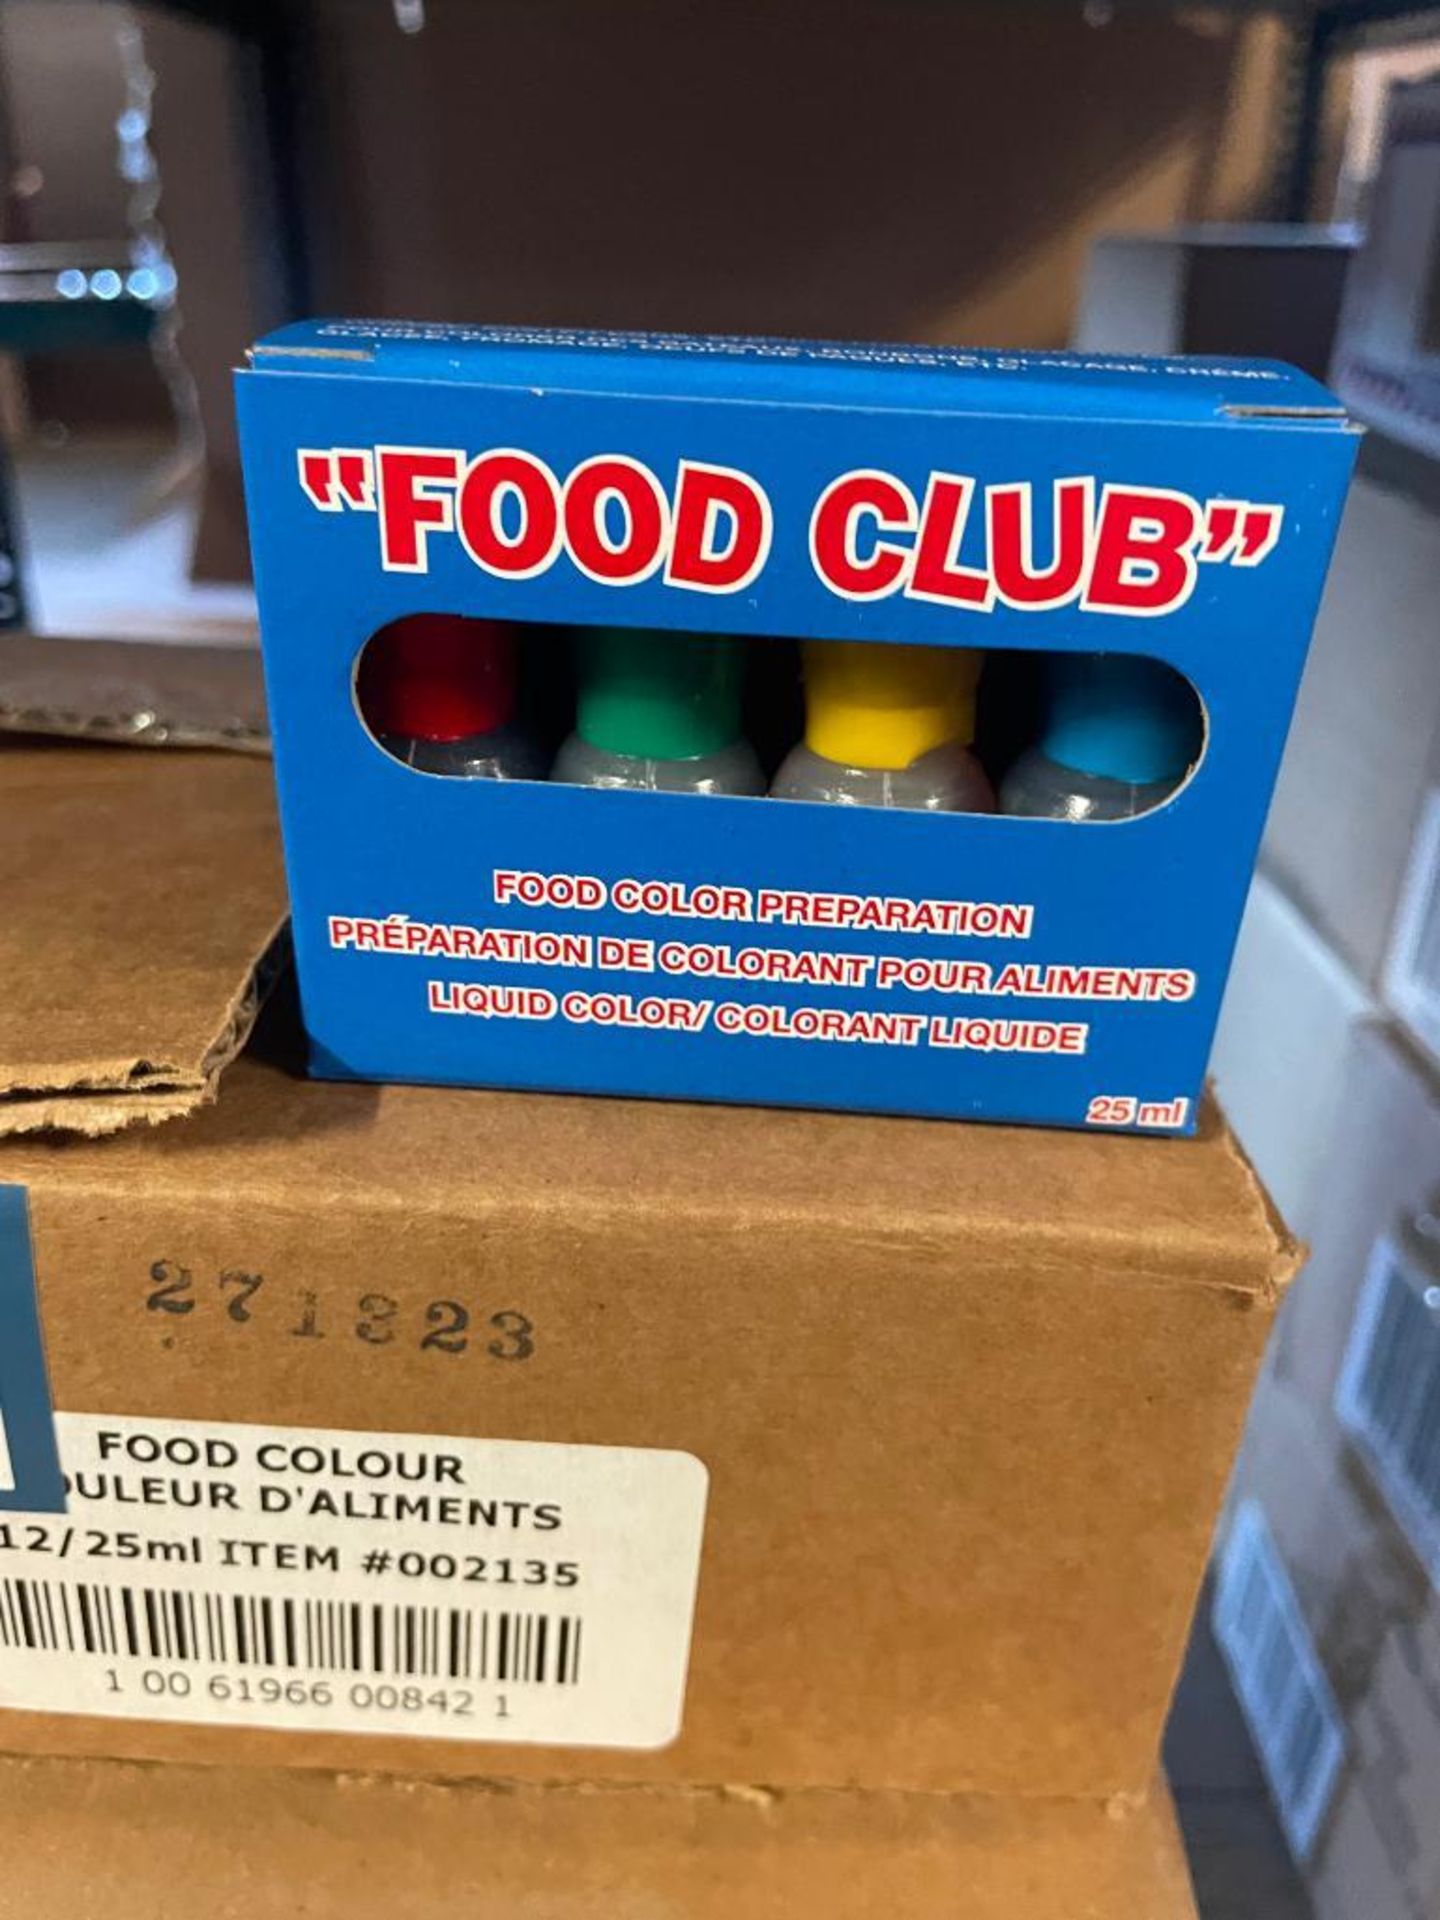 (13) BOXES OF FOOD CLUB FOOD COLOR PREPARATION, 12/25 ML PACKS PER BOX - Image 2 of 3